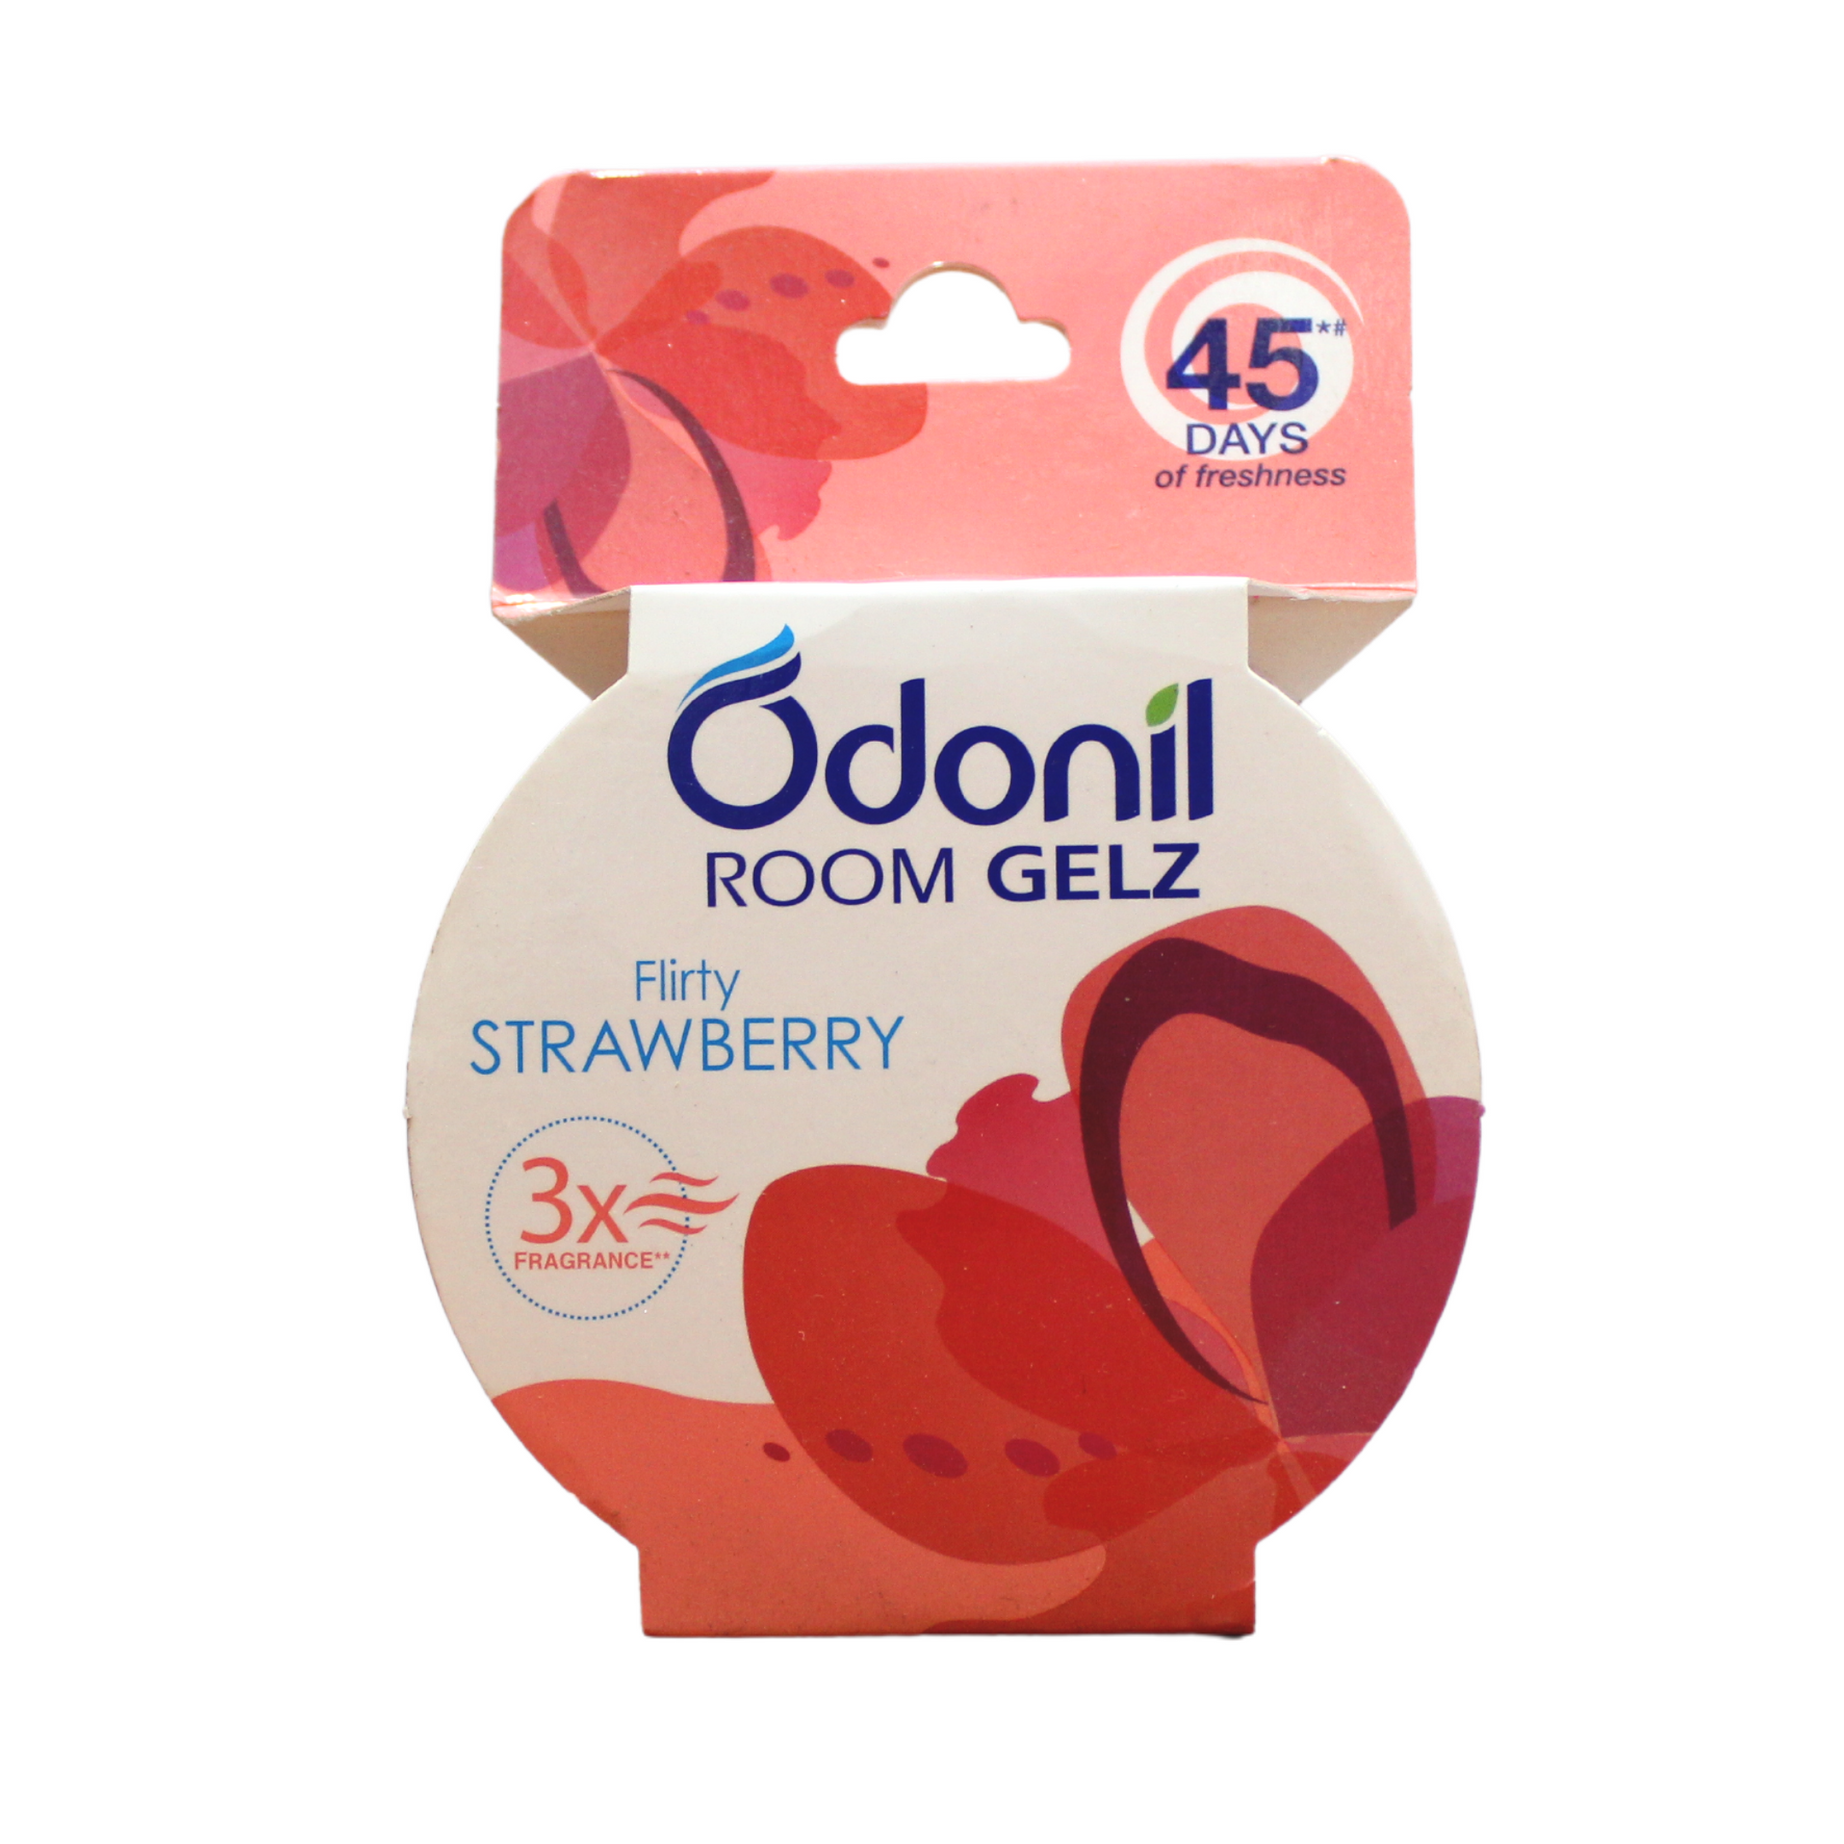 Shop Odonil Room Gelz 75gm - Flirty strawberry at price 75.00 from Dabur Online - Ayush Care